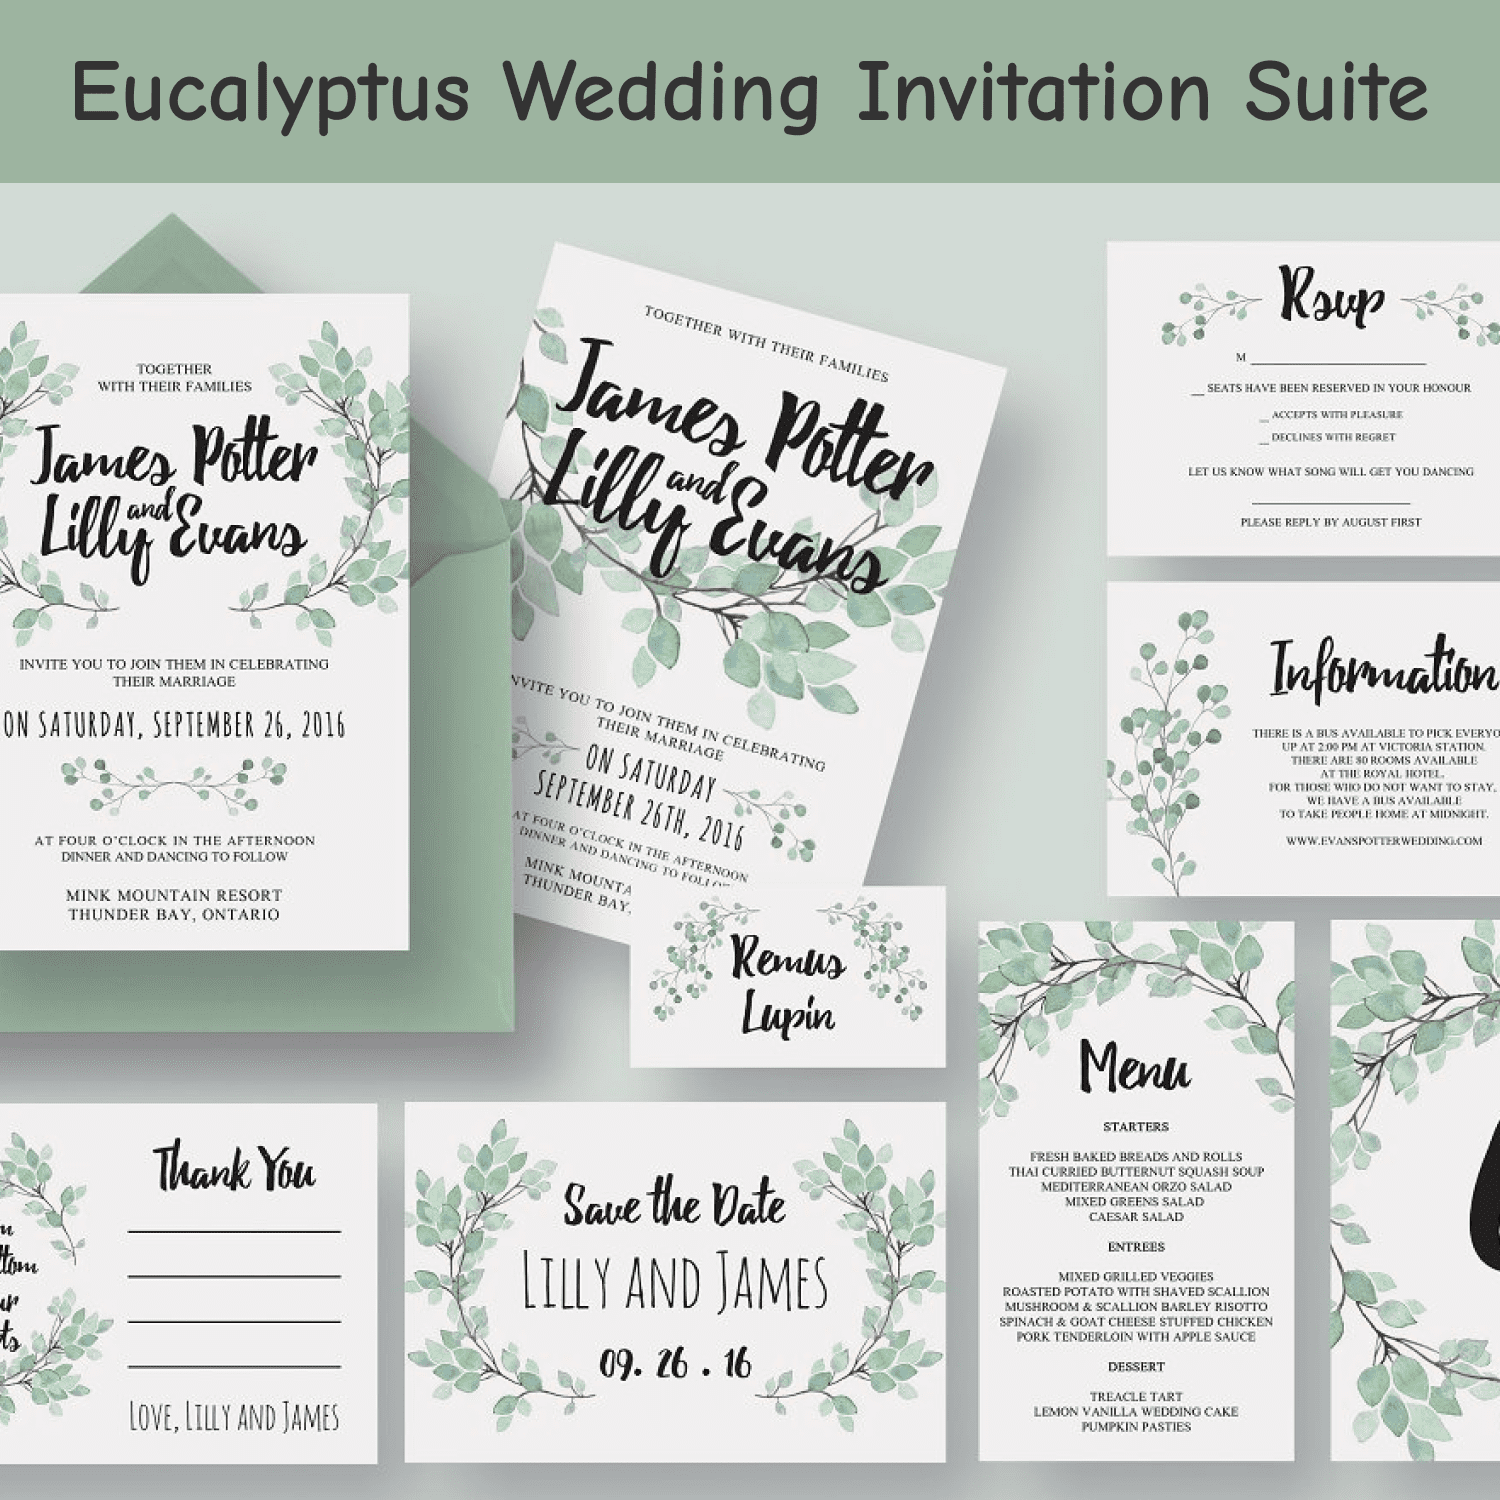 Eucalyptus Wedding Invitation Suite cover 1500x1500 2